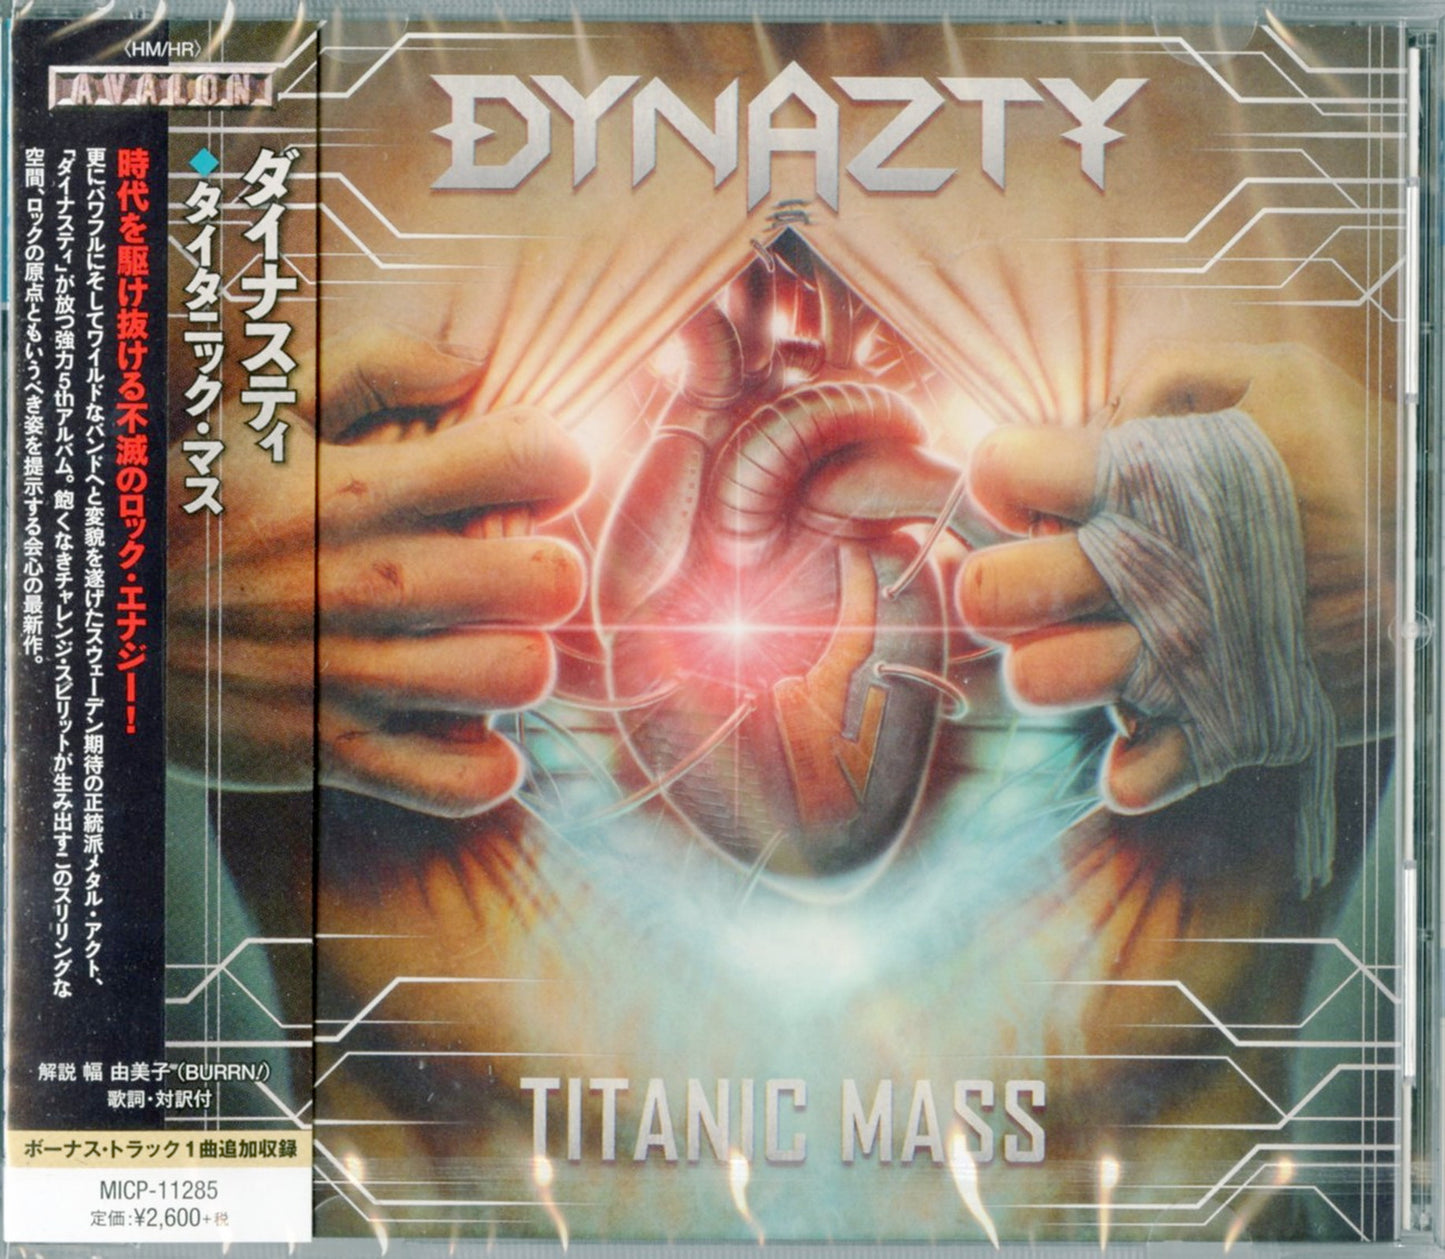 Dynazty - Titanic Mass - Bonus Track - CDs Vinyl Japan Store